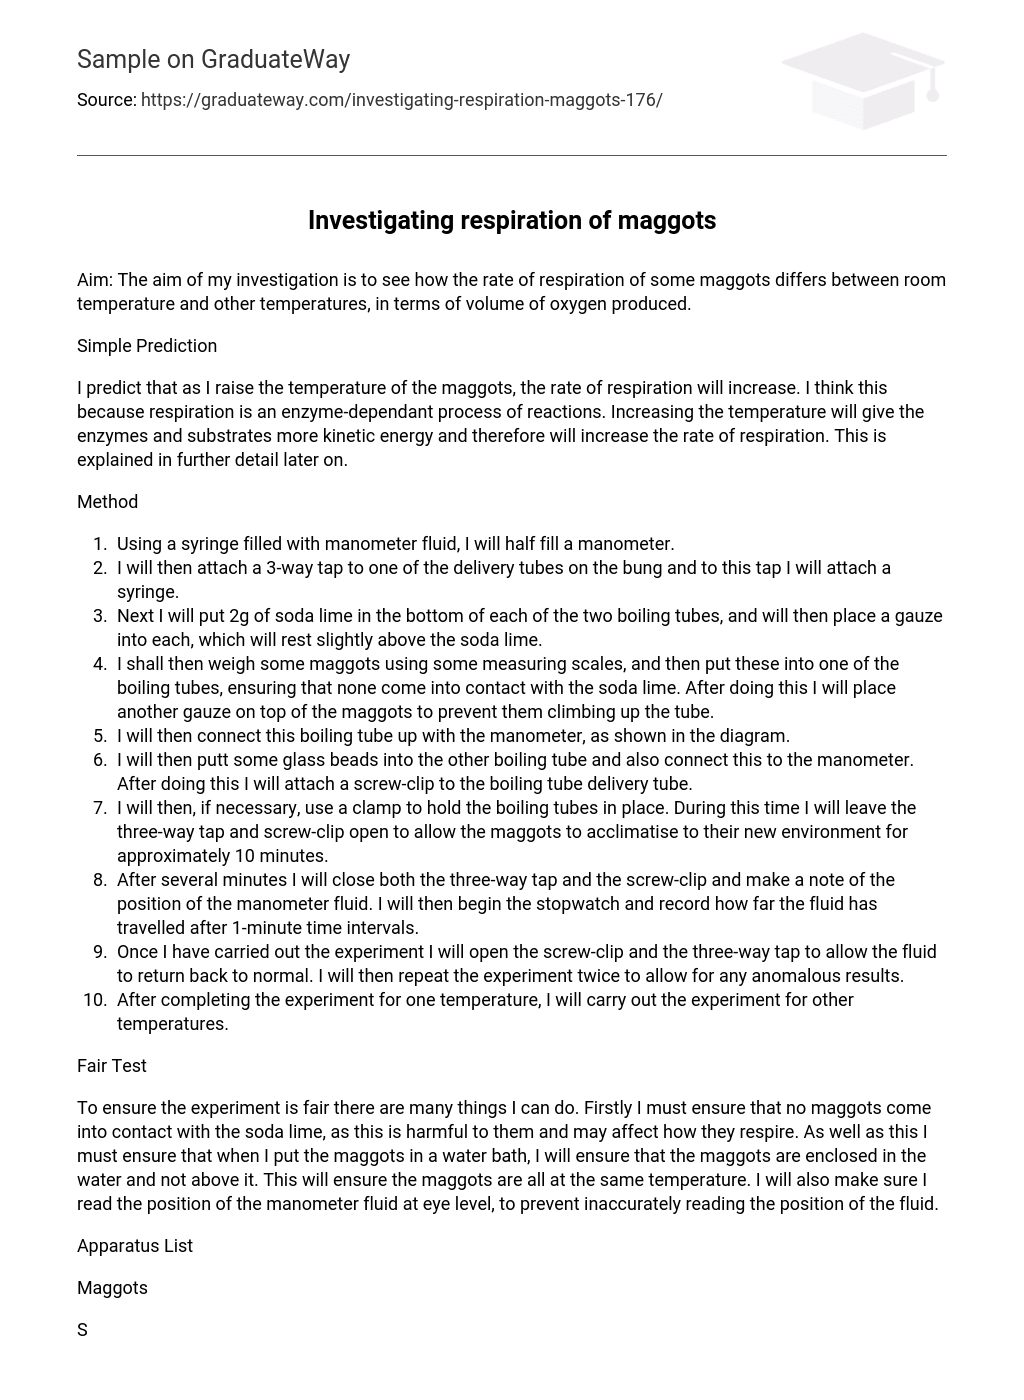 Investigating Respiration of Maggots